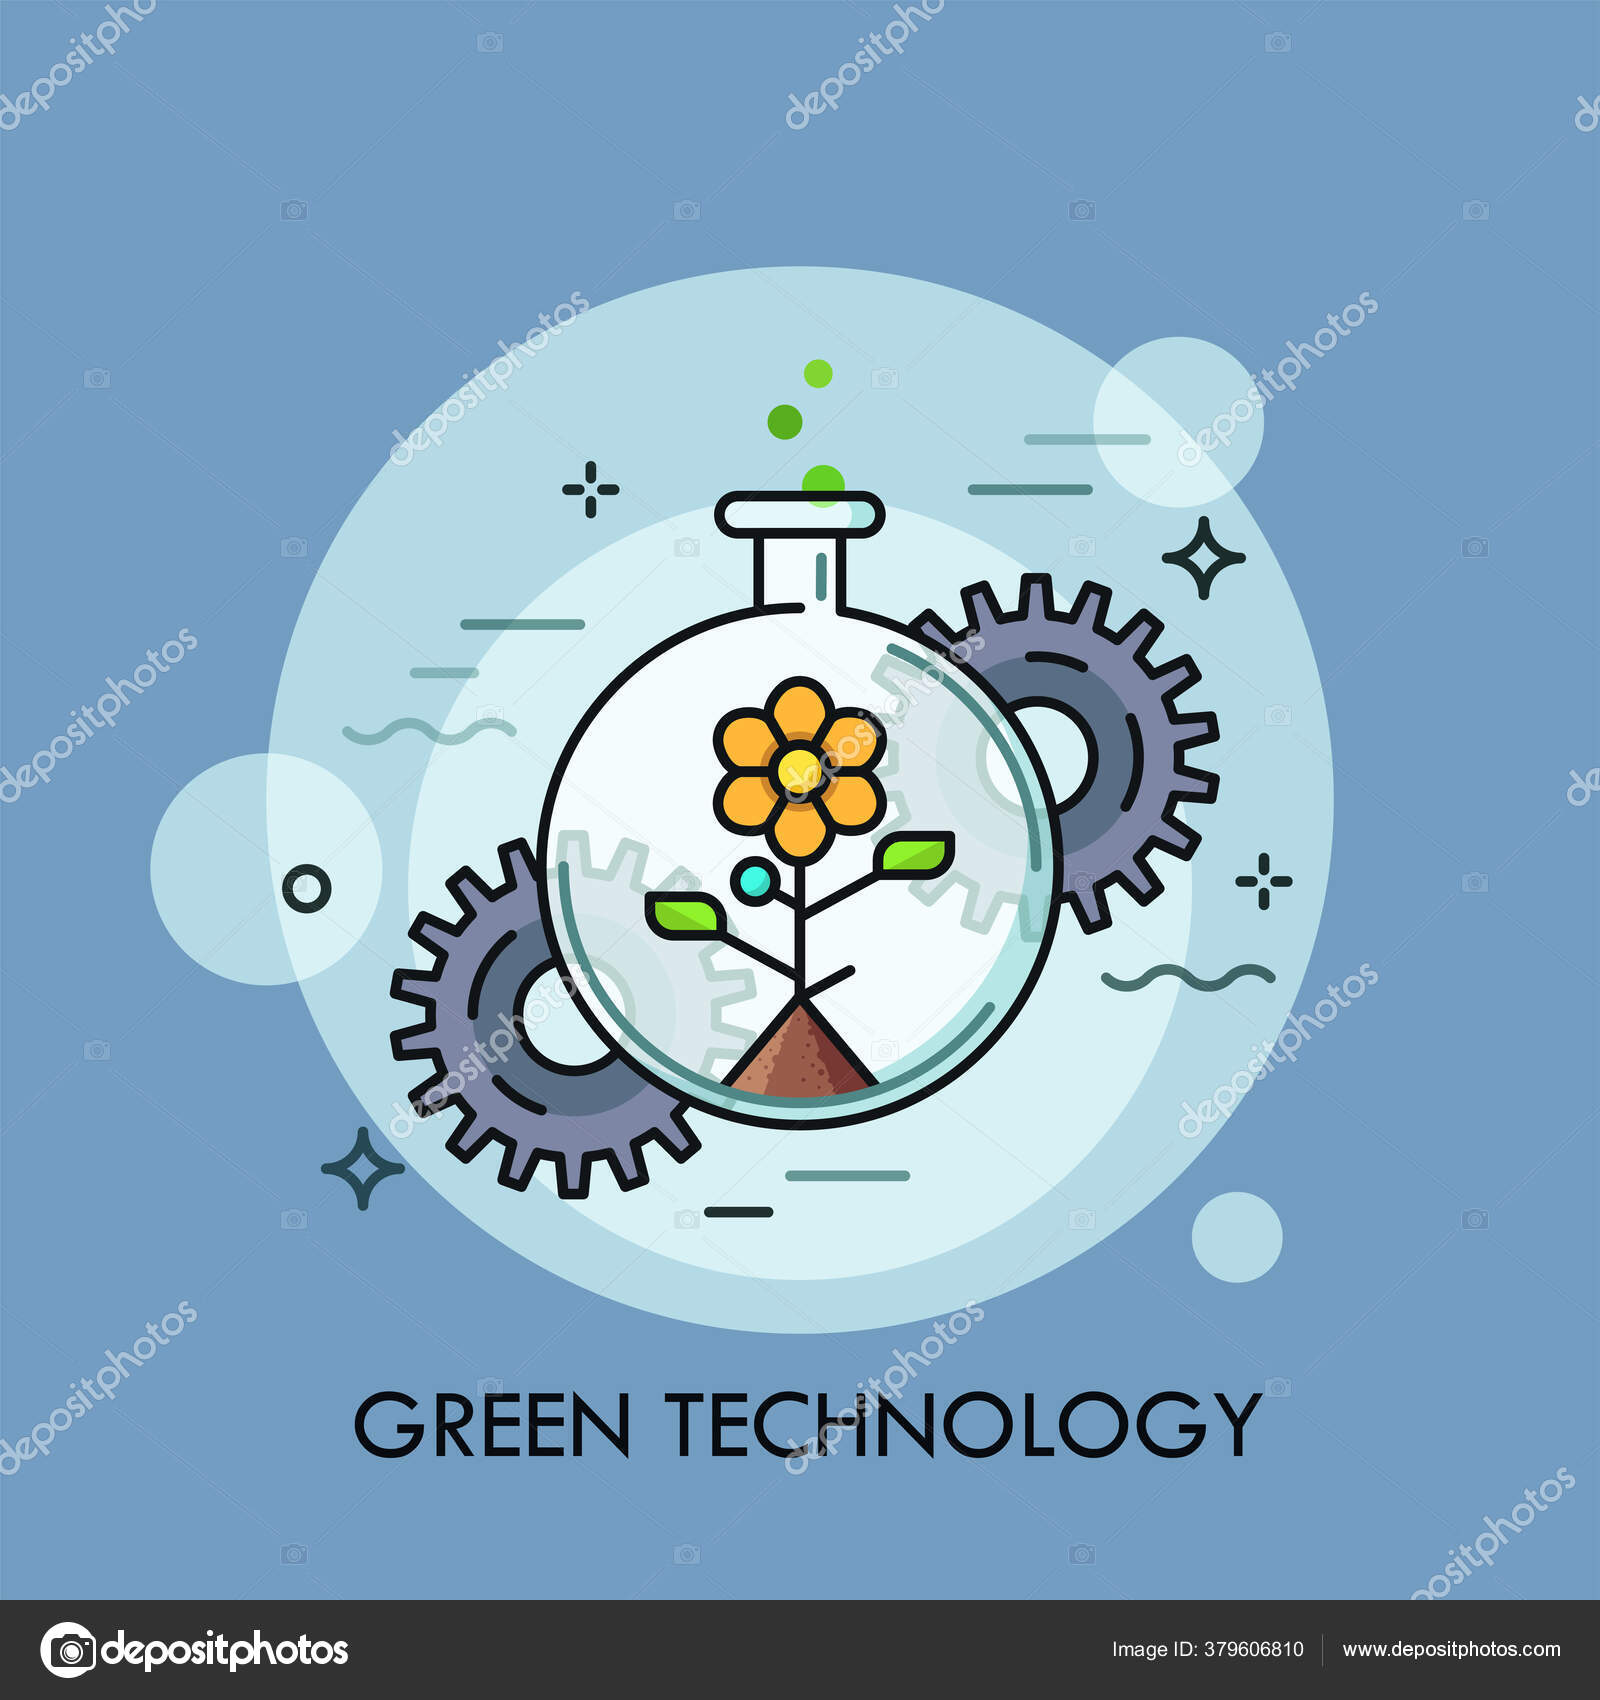 Environmental science Vector Art Stock Images | Depositphotos